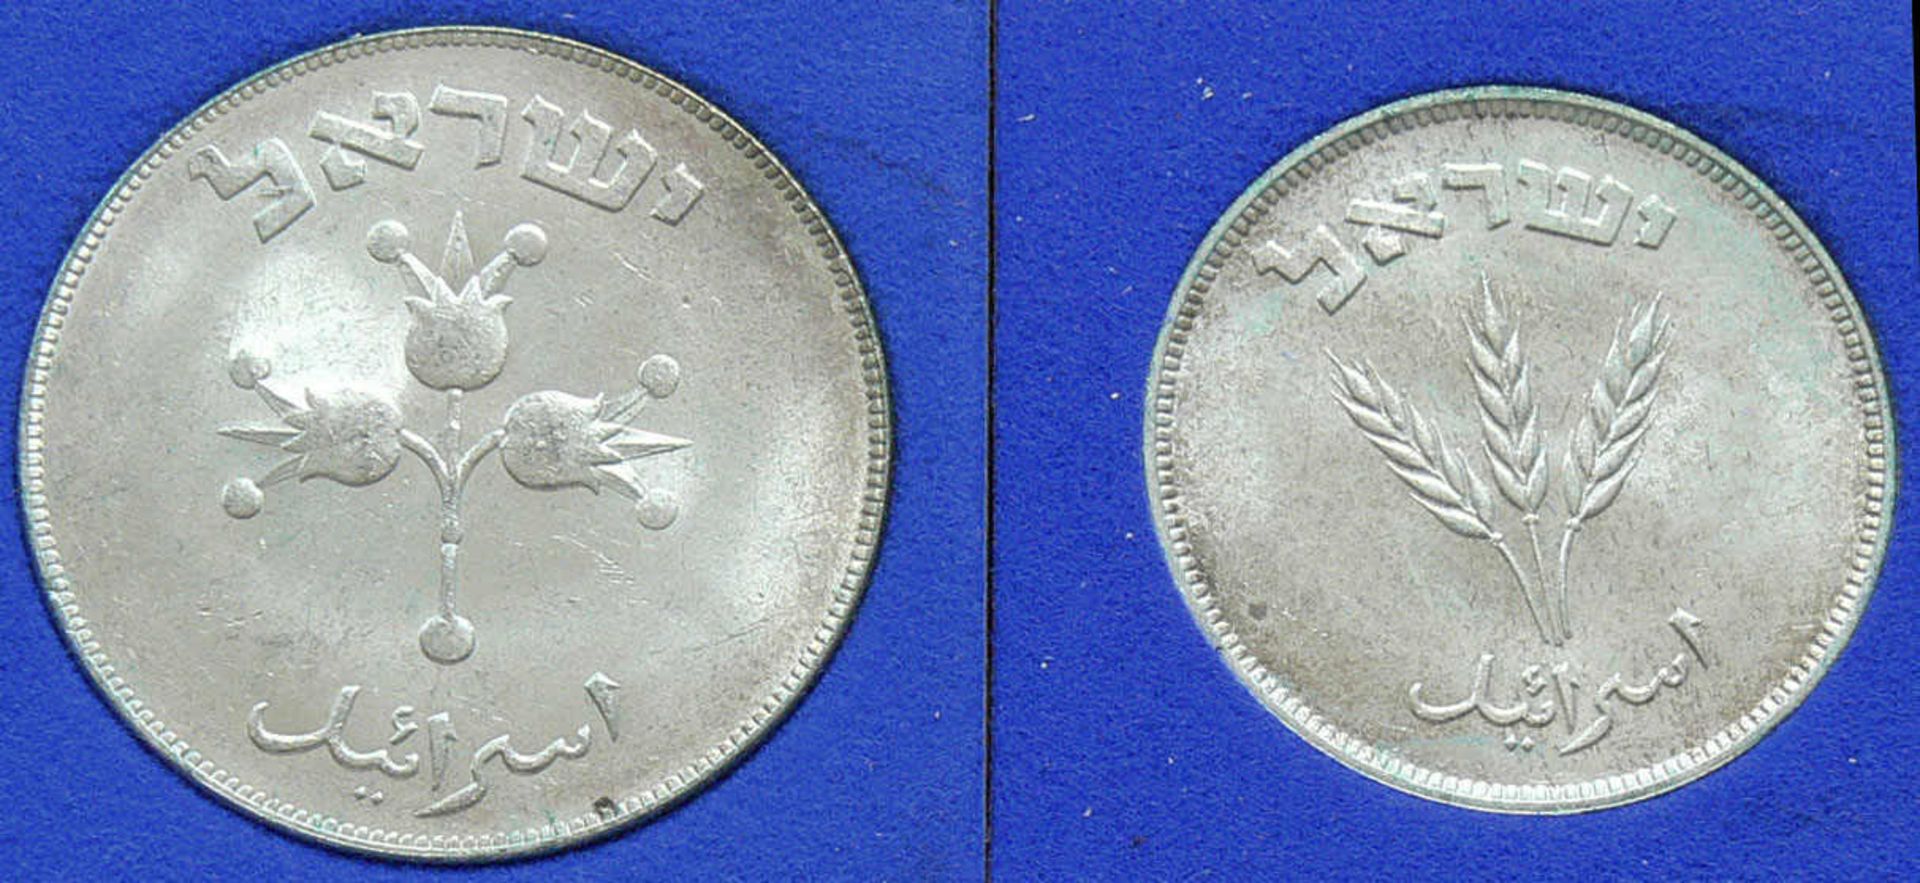 Israel 1949, 1 x 500 Prutot und 1 x 250 Prutot. Erhaltung: stgl.Mindestpreis: 5 EUR - Image 2 of 2